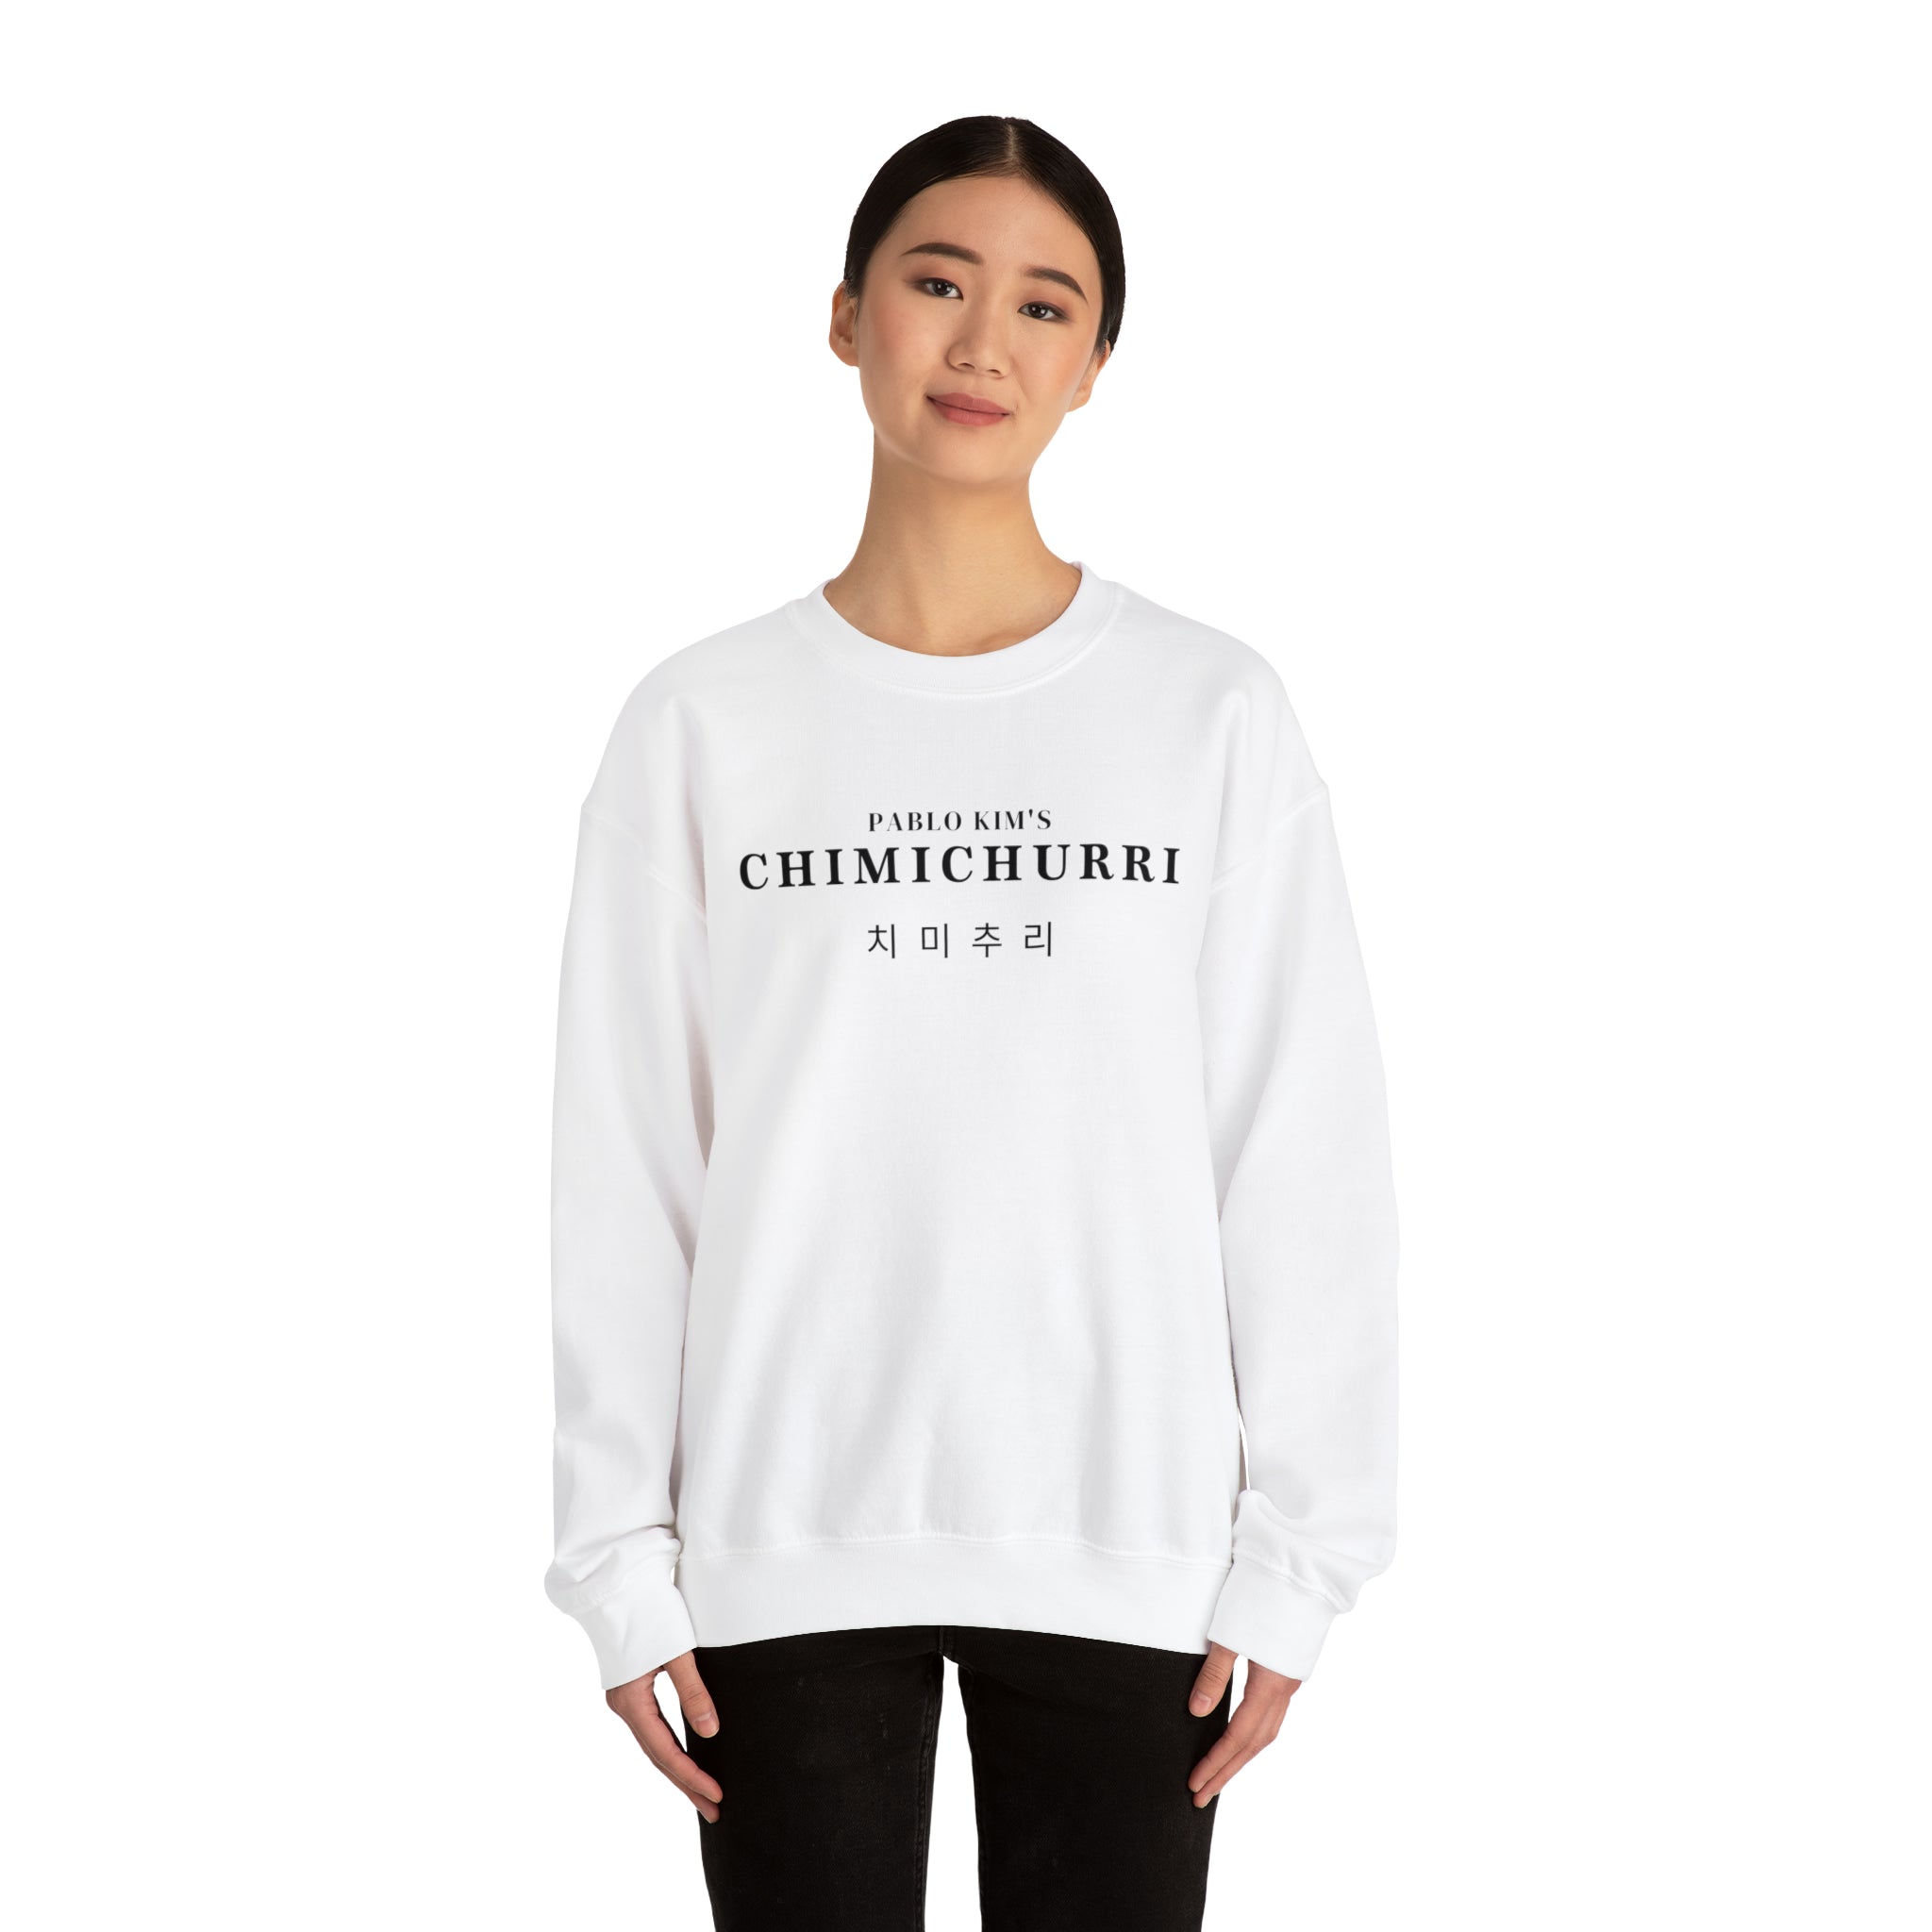 Chimichurri with Korean Text - Crewneck Sweatshirt